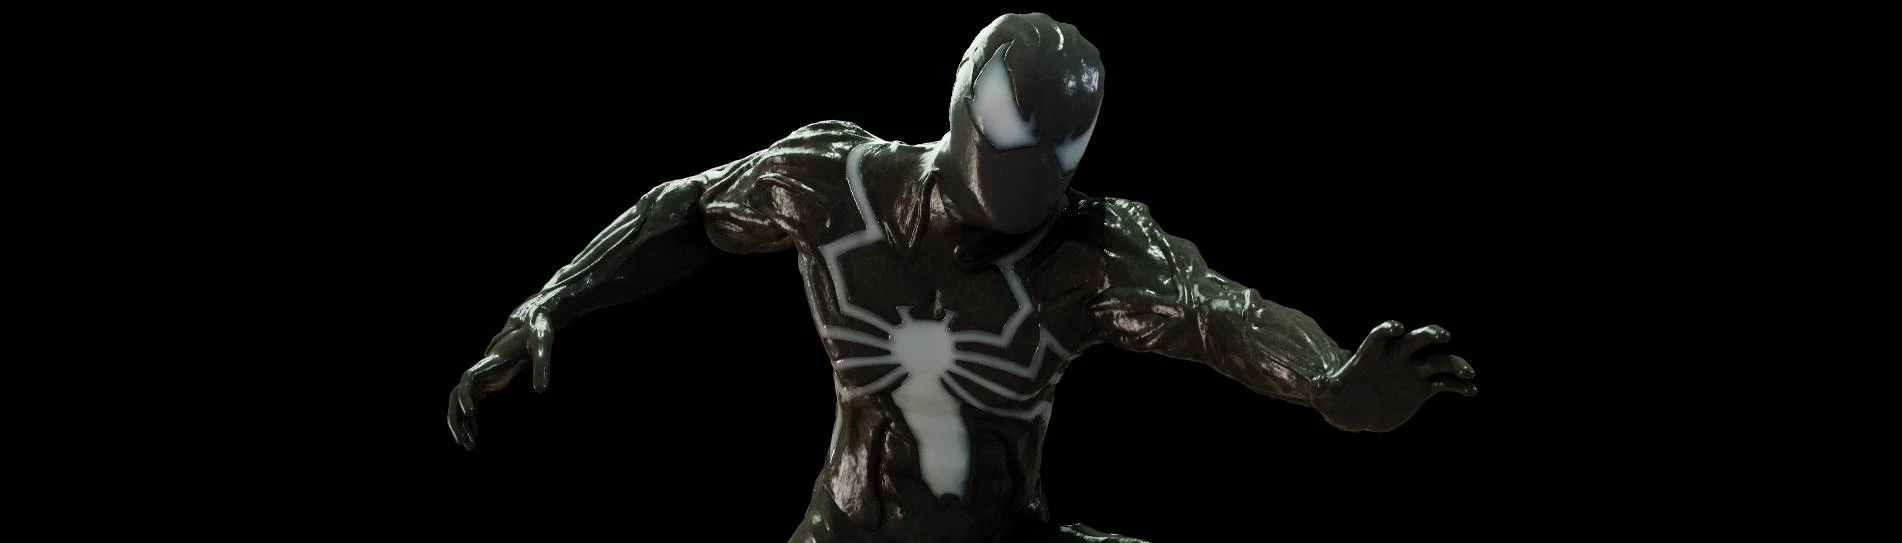 MSM2 at Marvel's Spider-Man Remastered Nexus - Mods and community